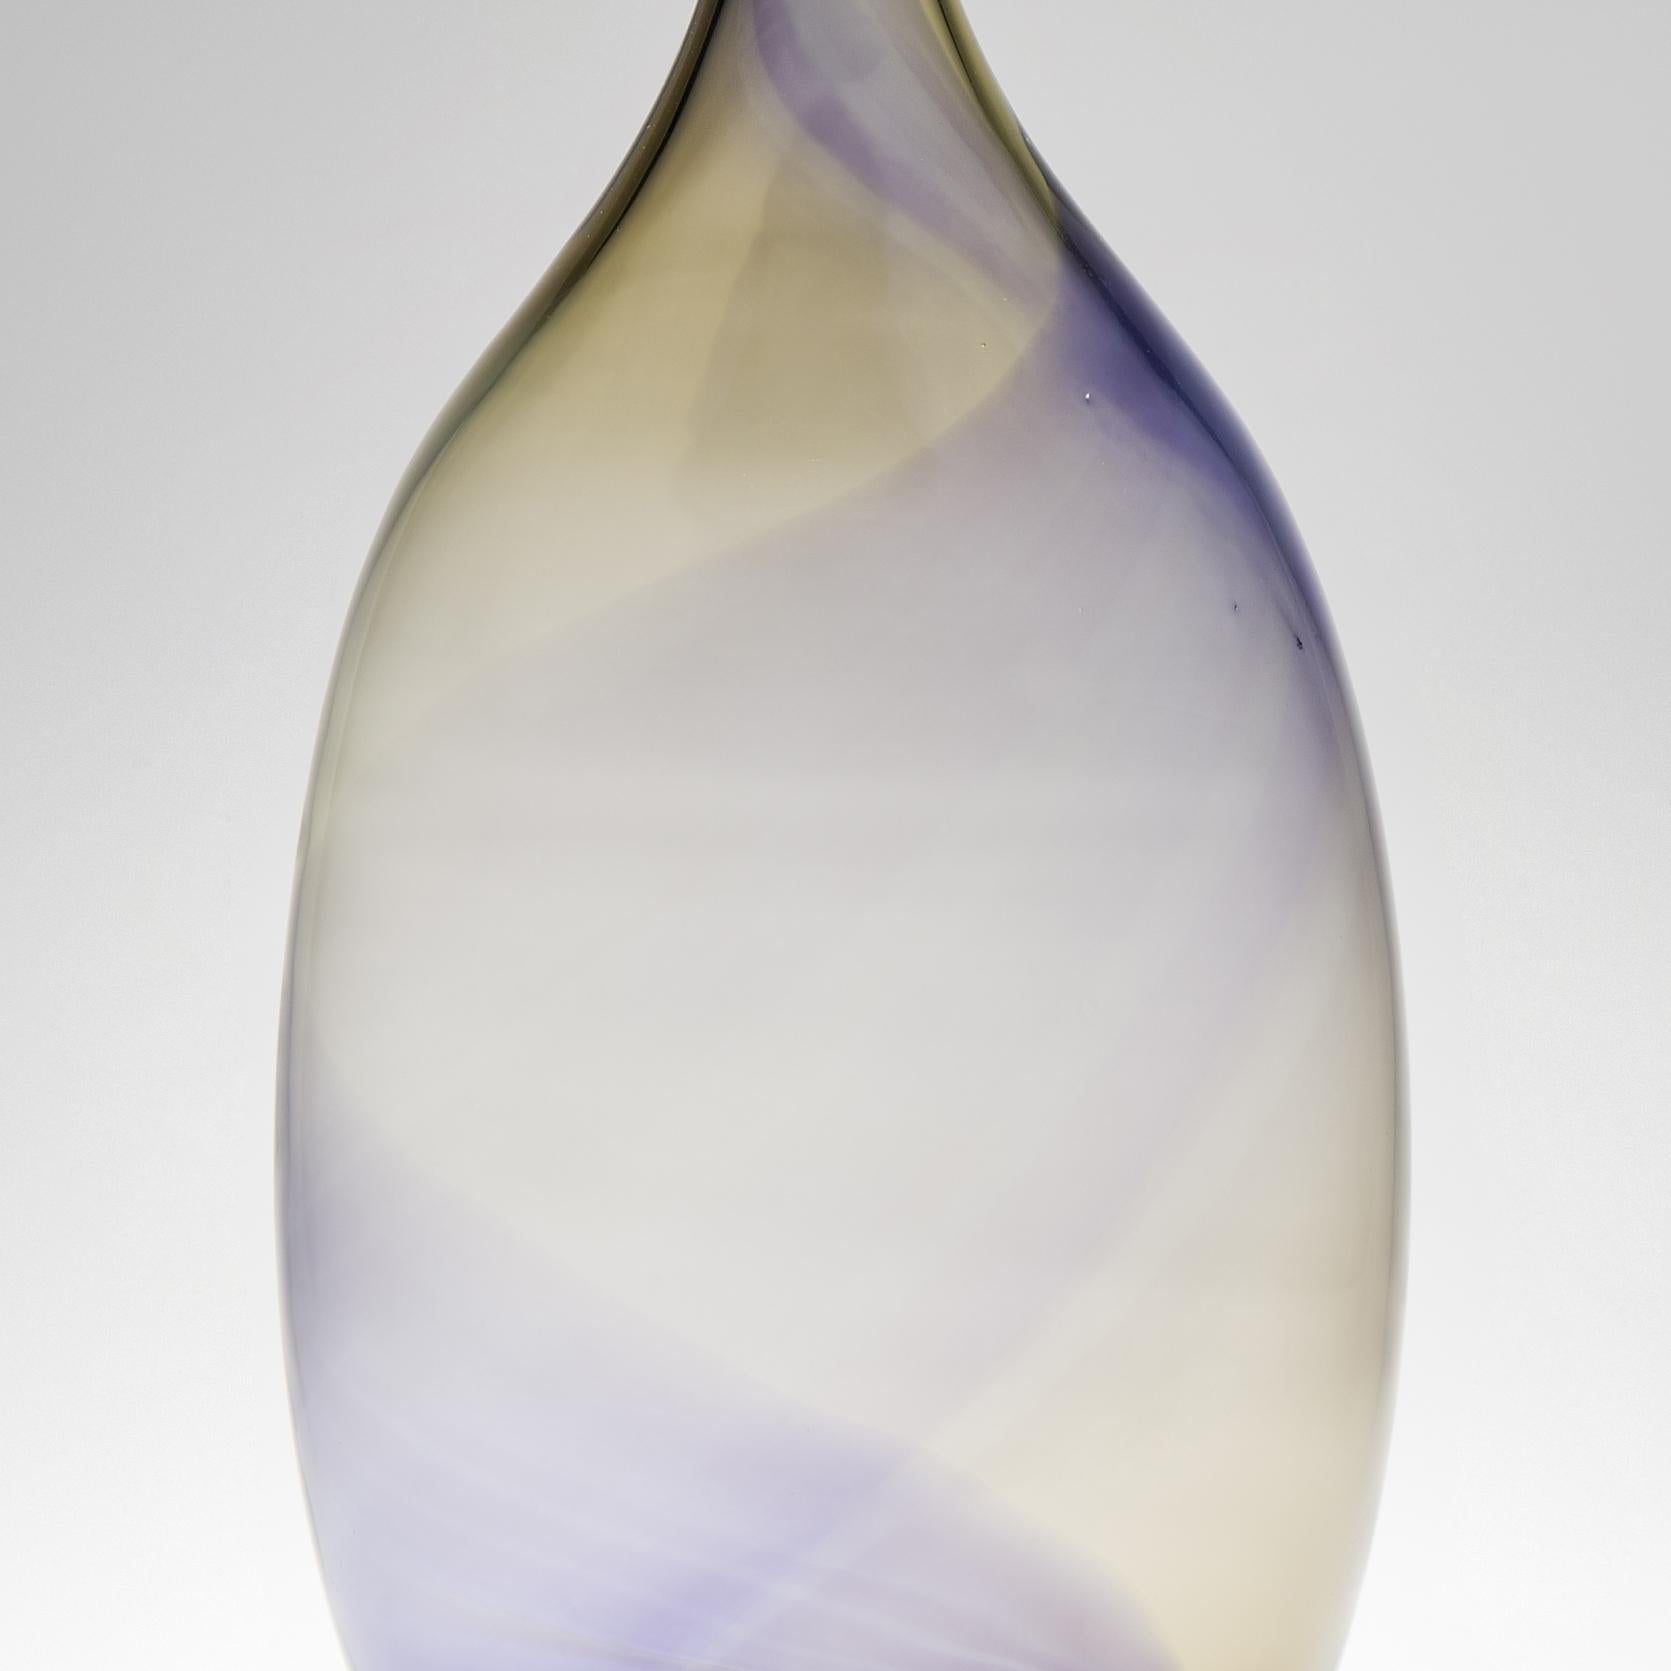 Organic Modern Fidji I, a Unique Bronze & Purple Tall Sculptural Bottle by Kjell Engman